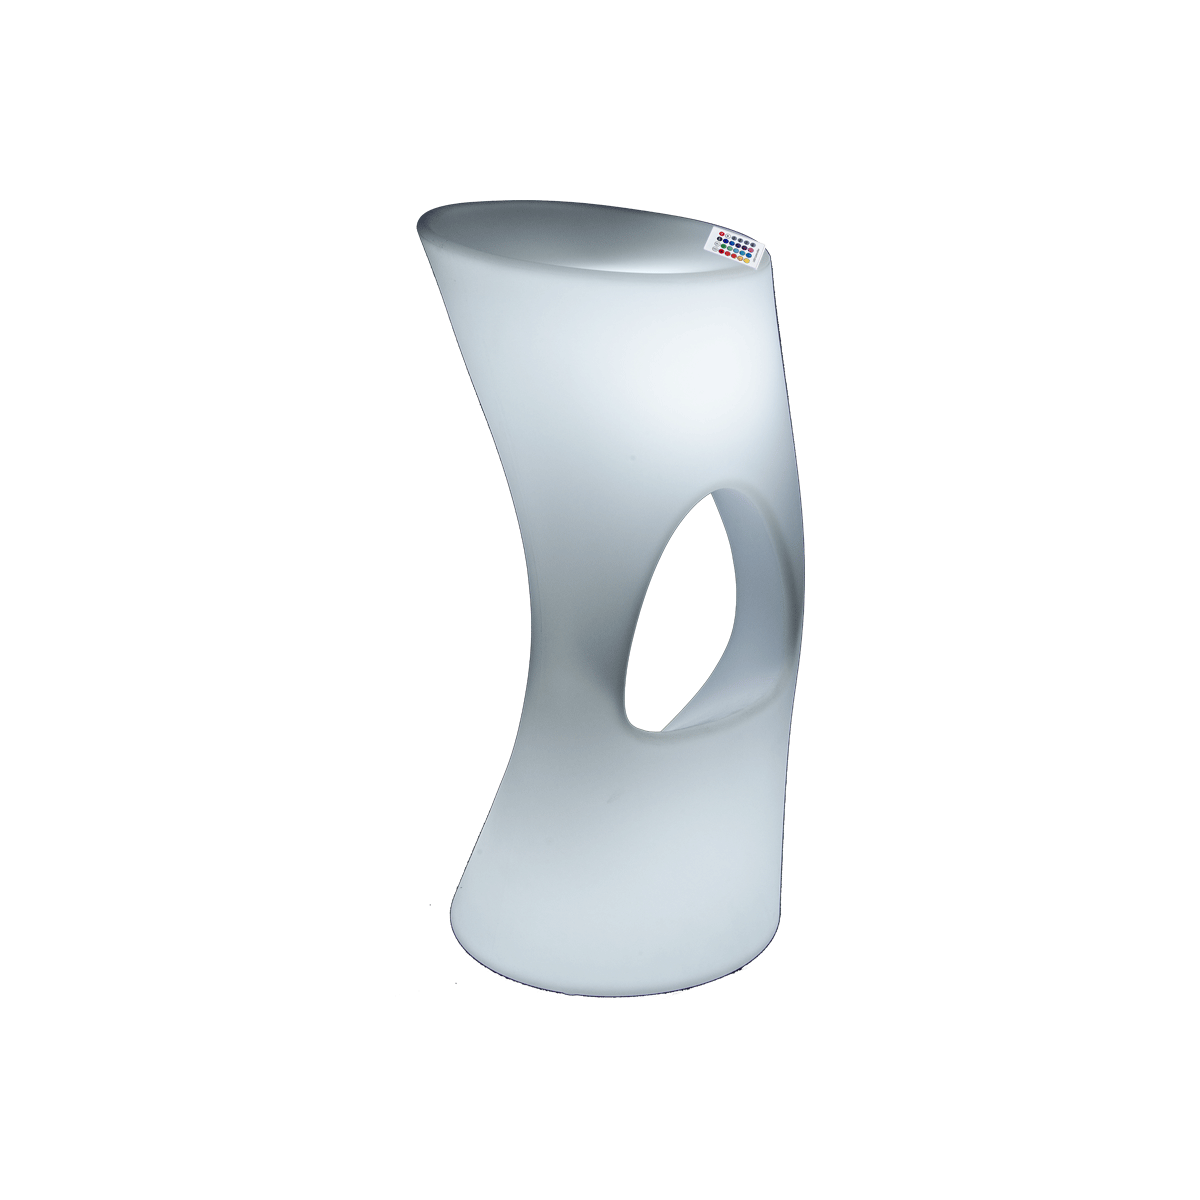 Mobilier lumineux - AFX Light - LED-STOOL